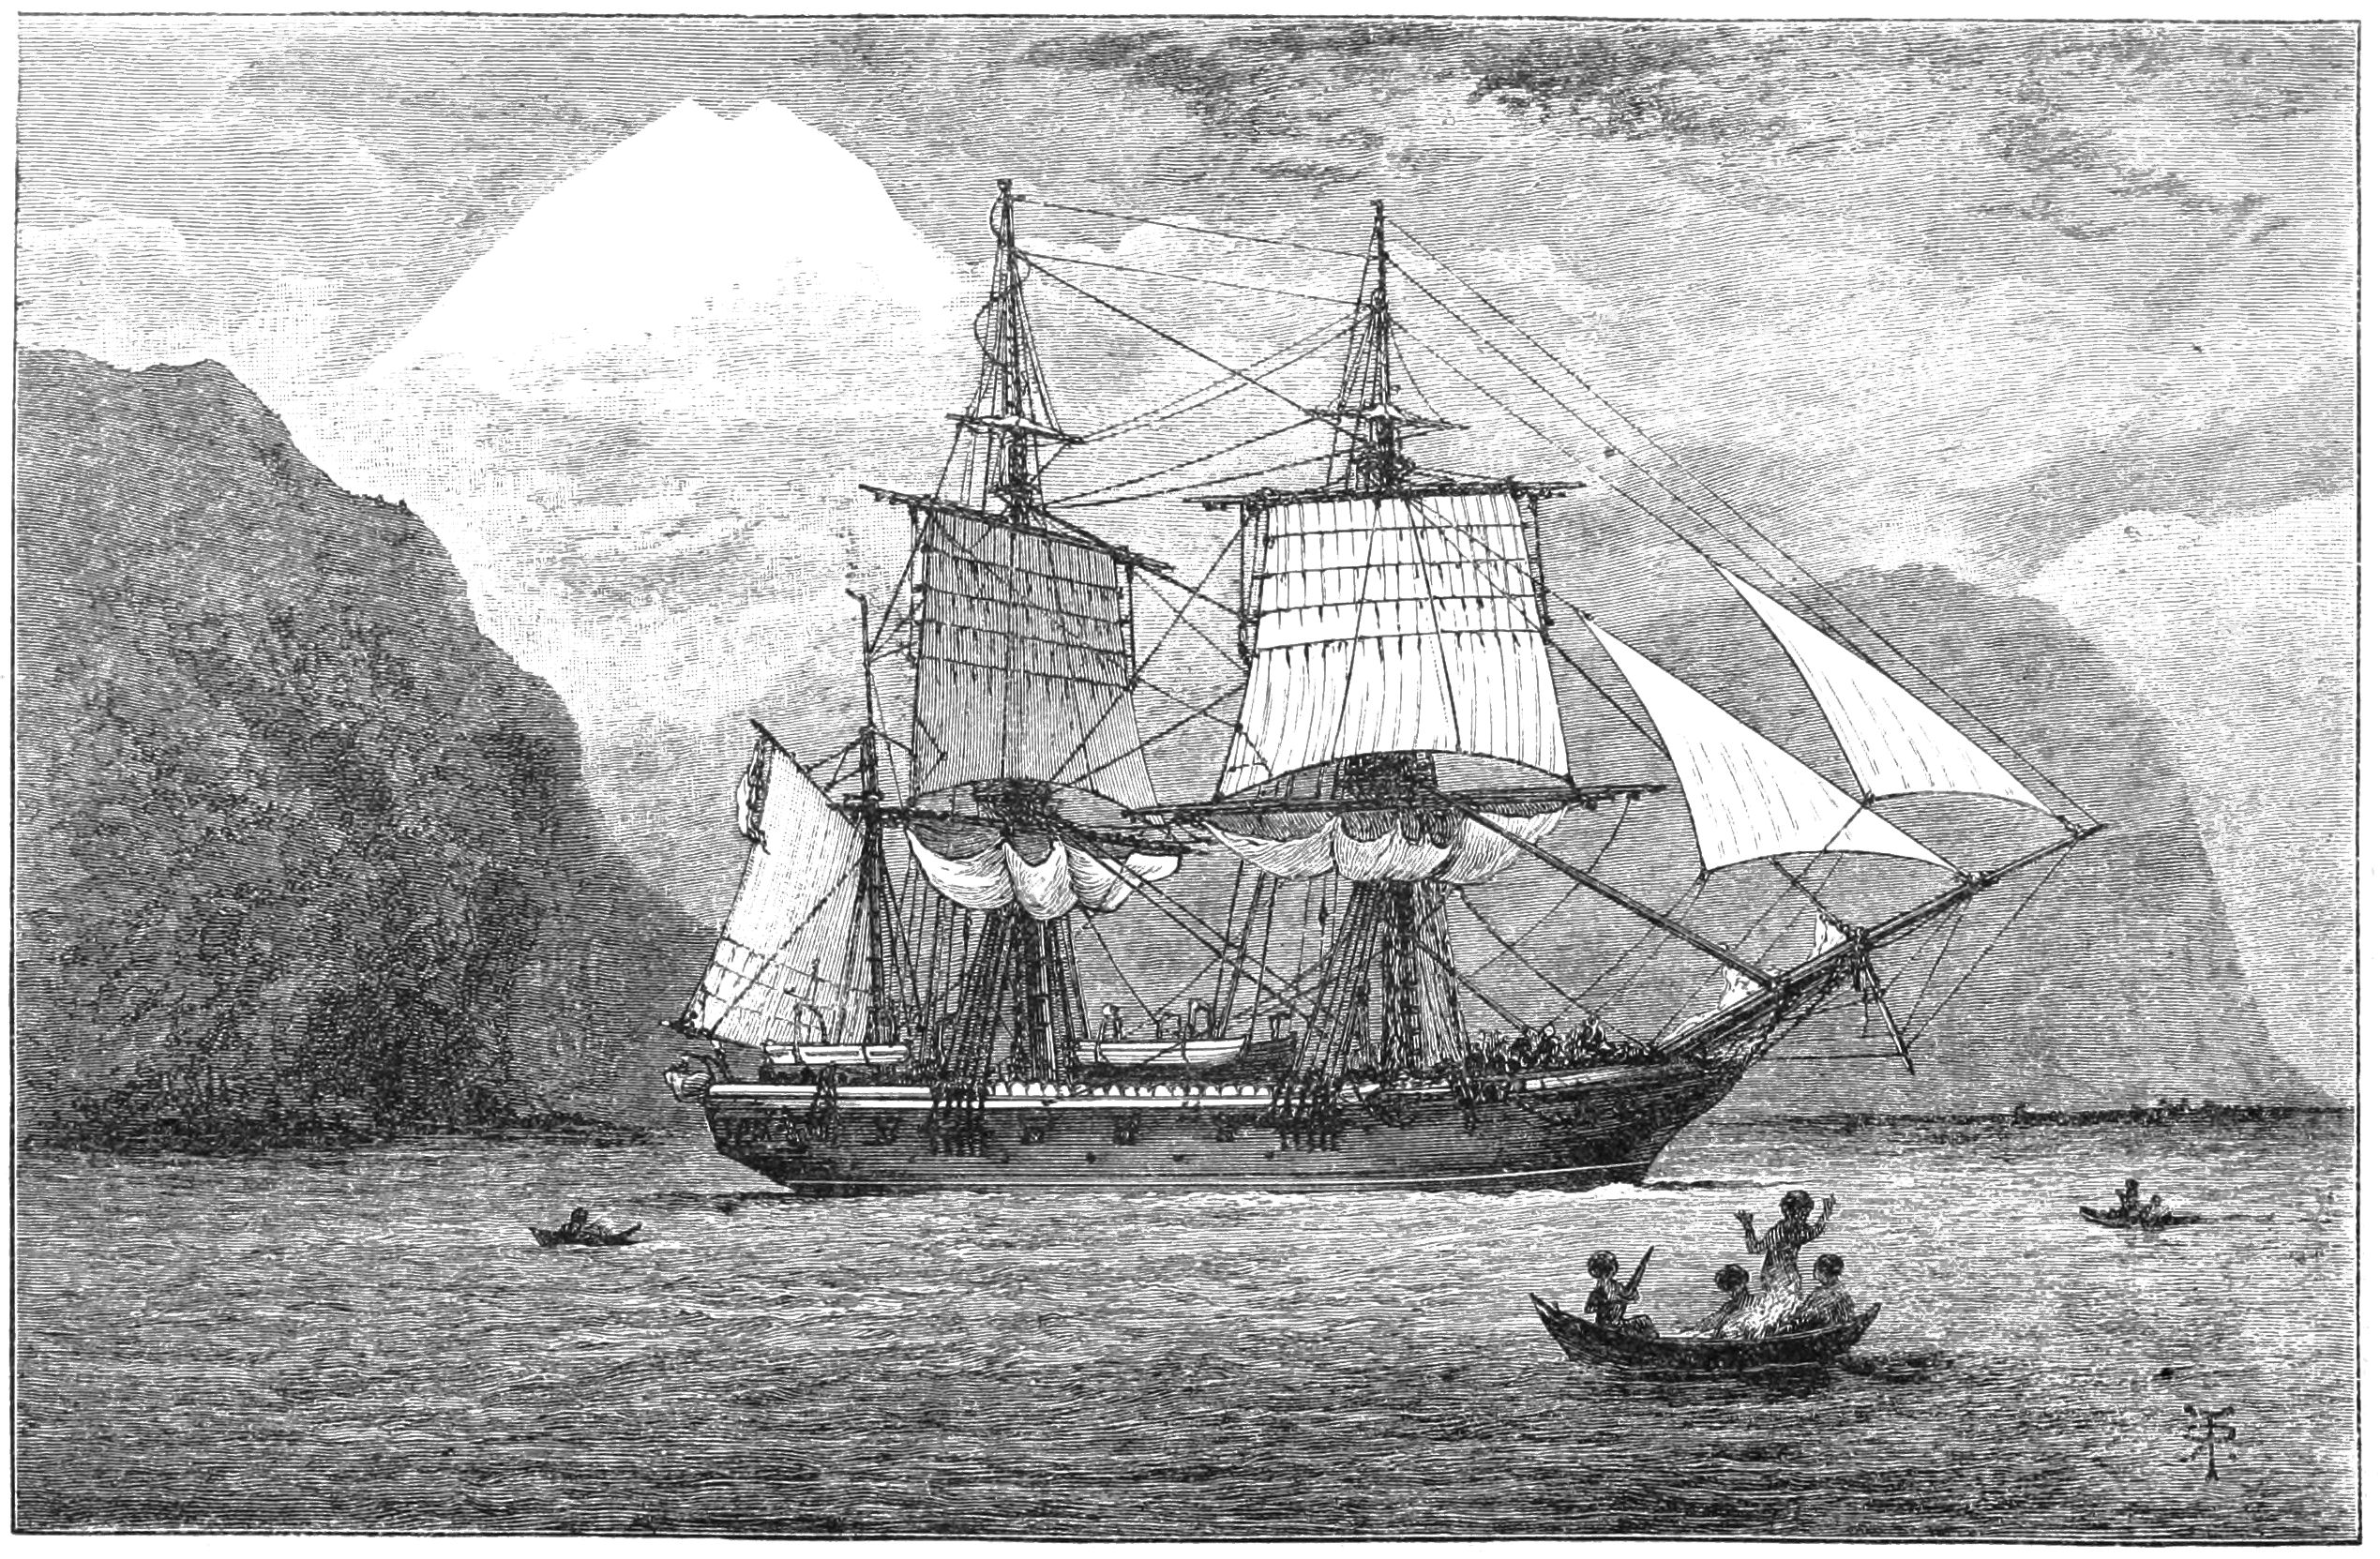 charles darwin voyage of the beagle pdf